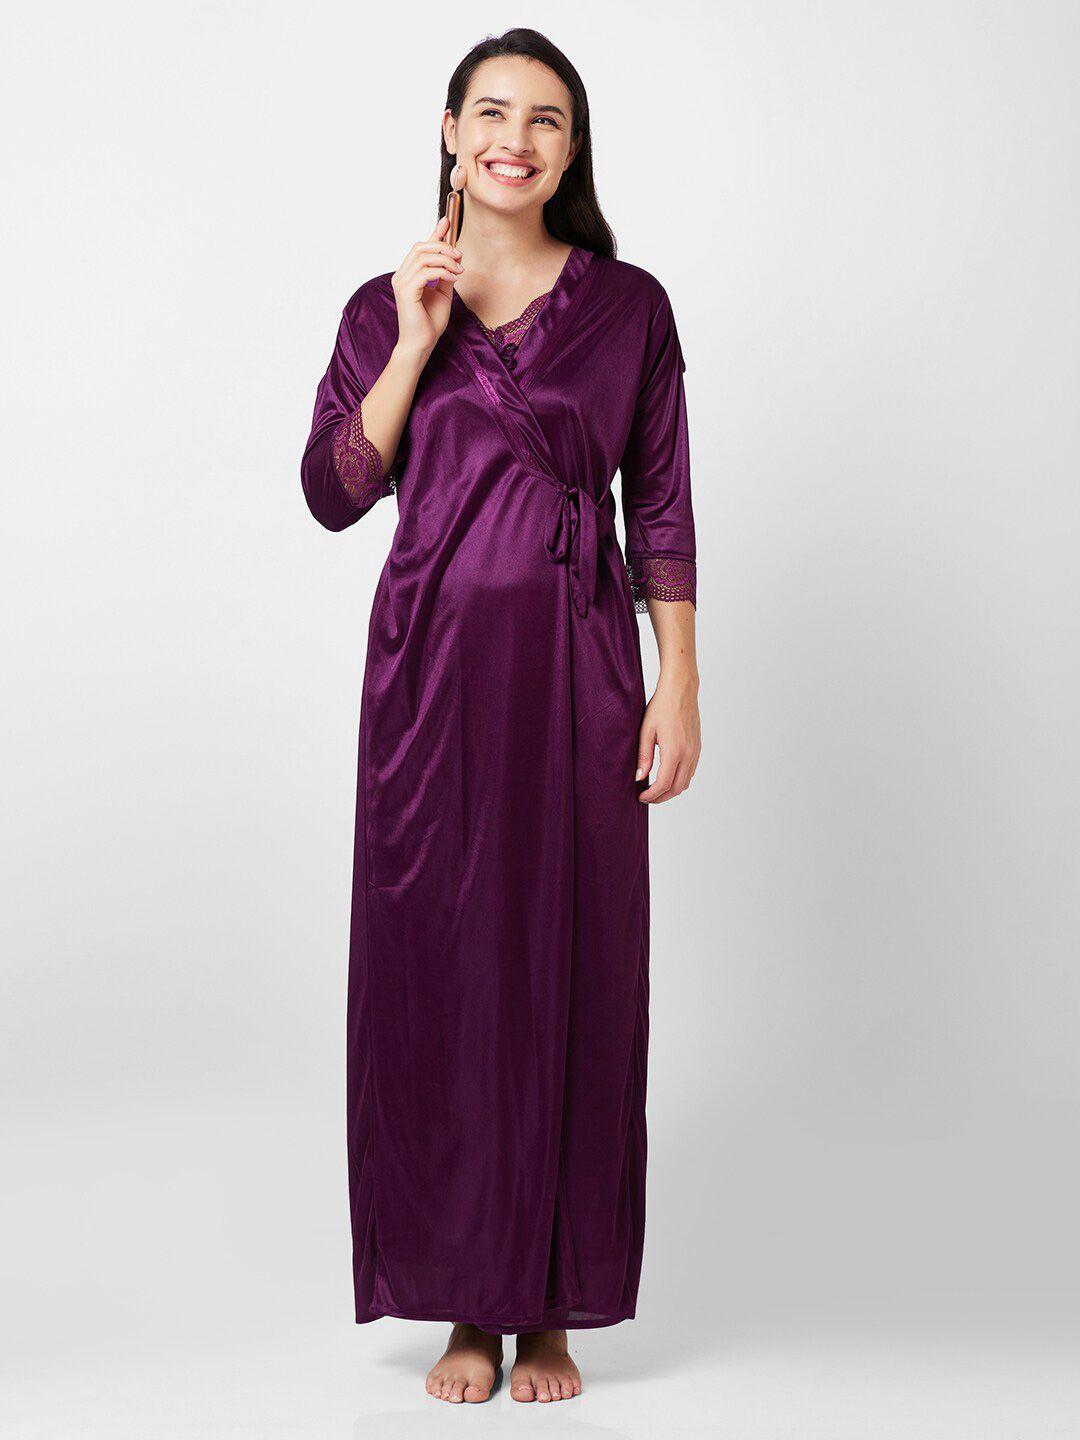 fashionrack lace inserted maxi nightdress with robe